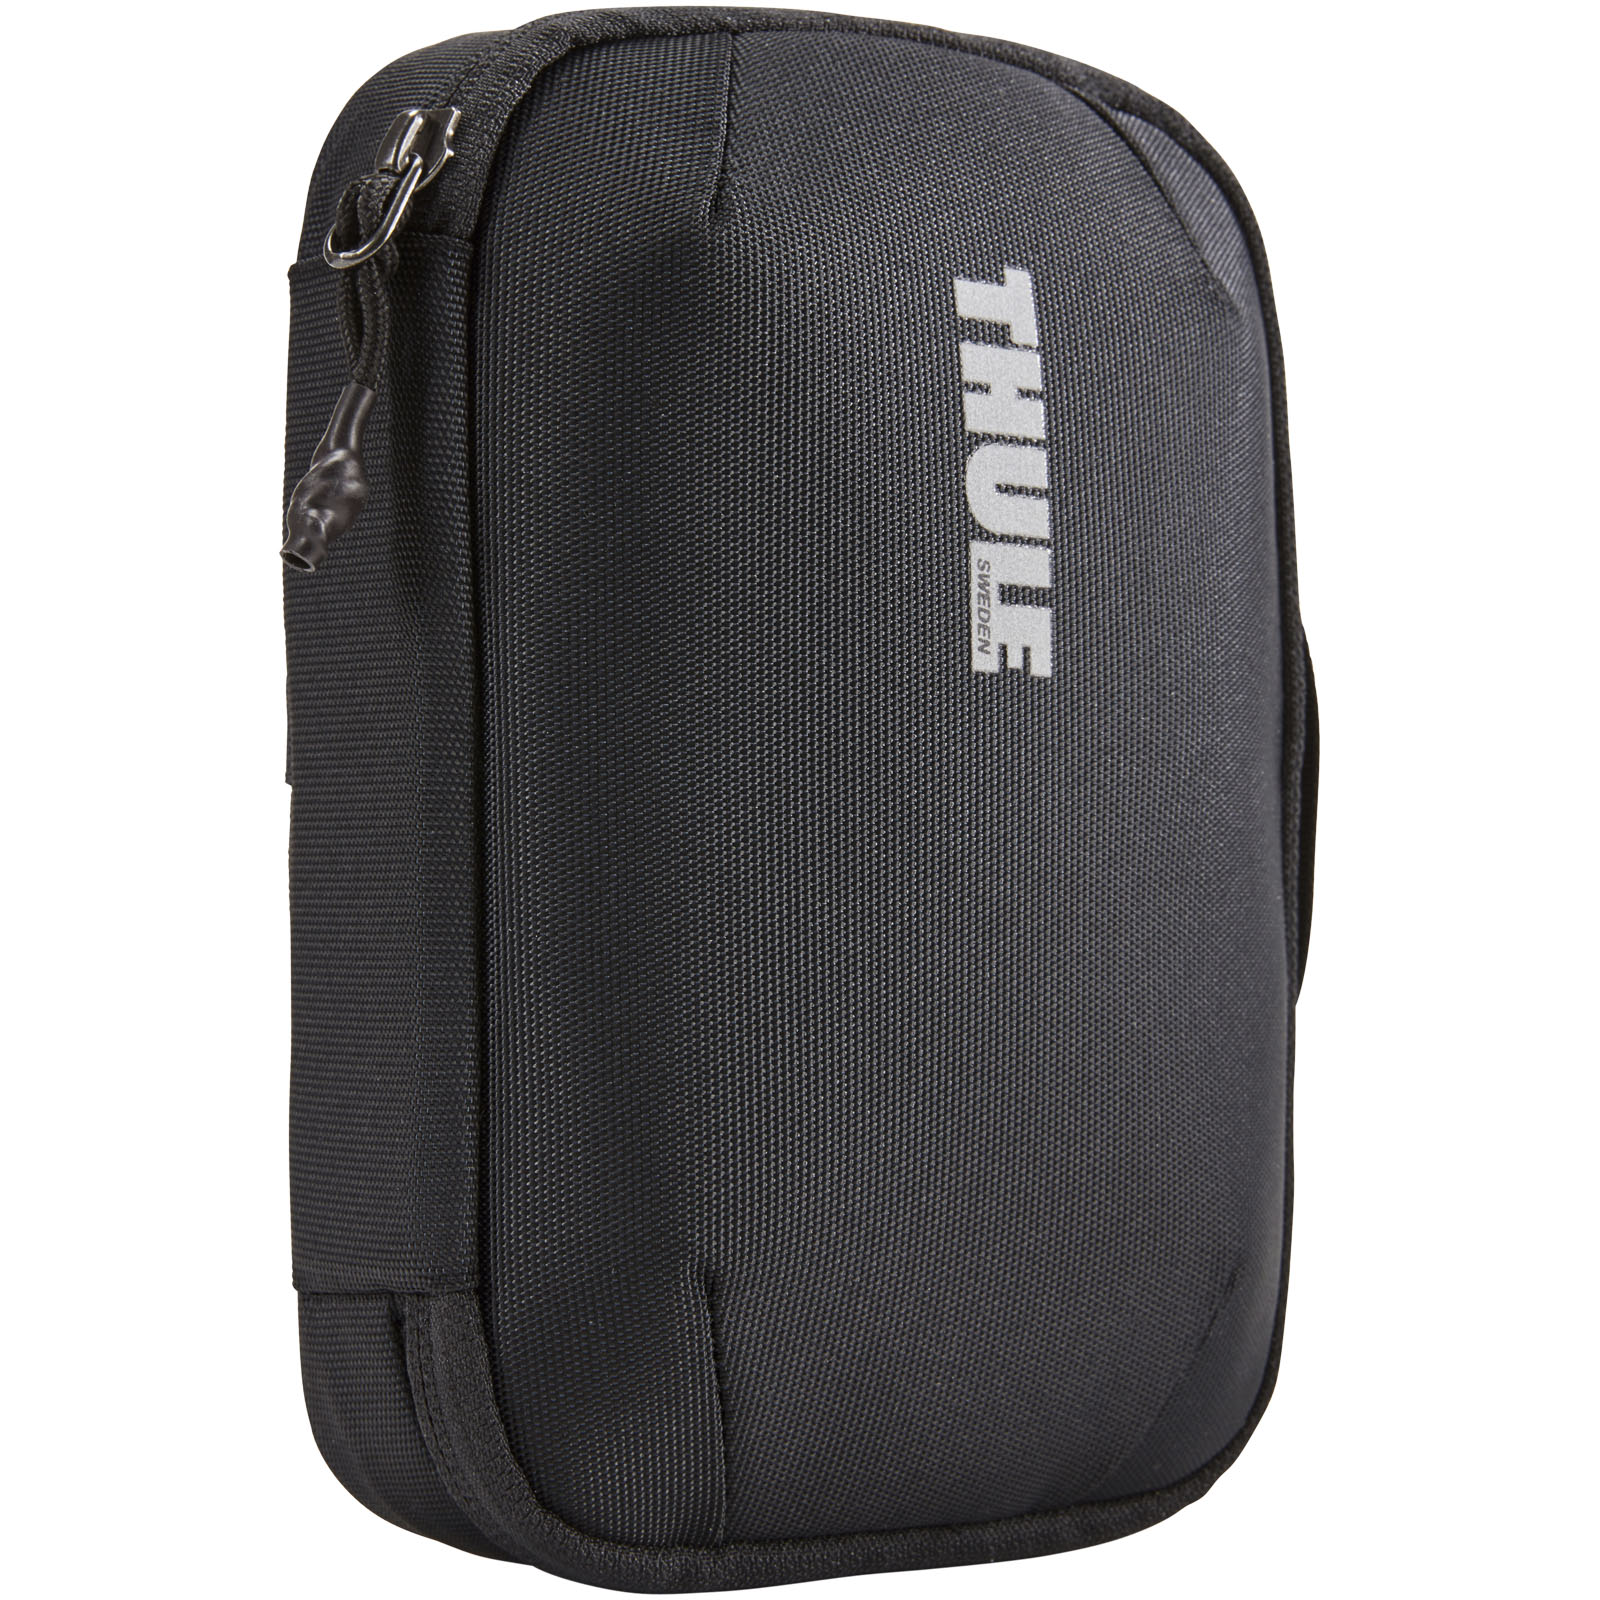 Travel Accessories - Thule Subterra PowerShuttle accessories bag